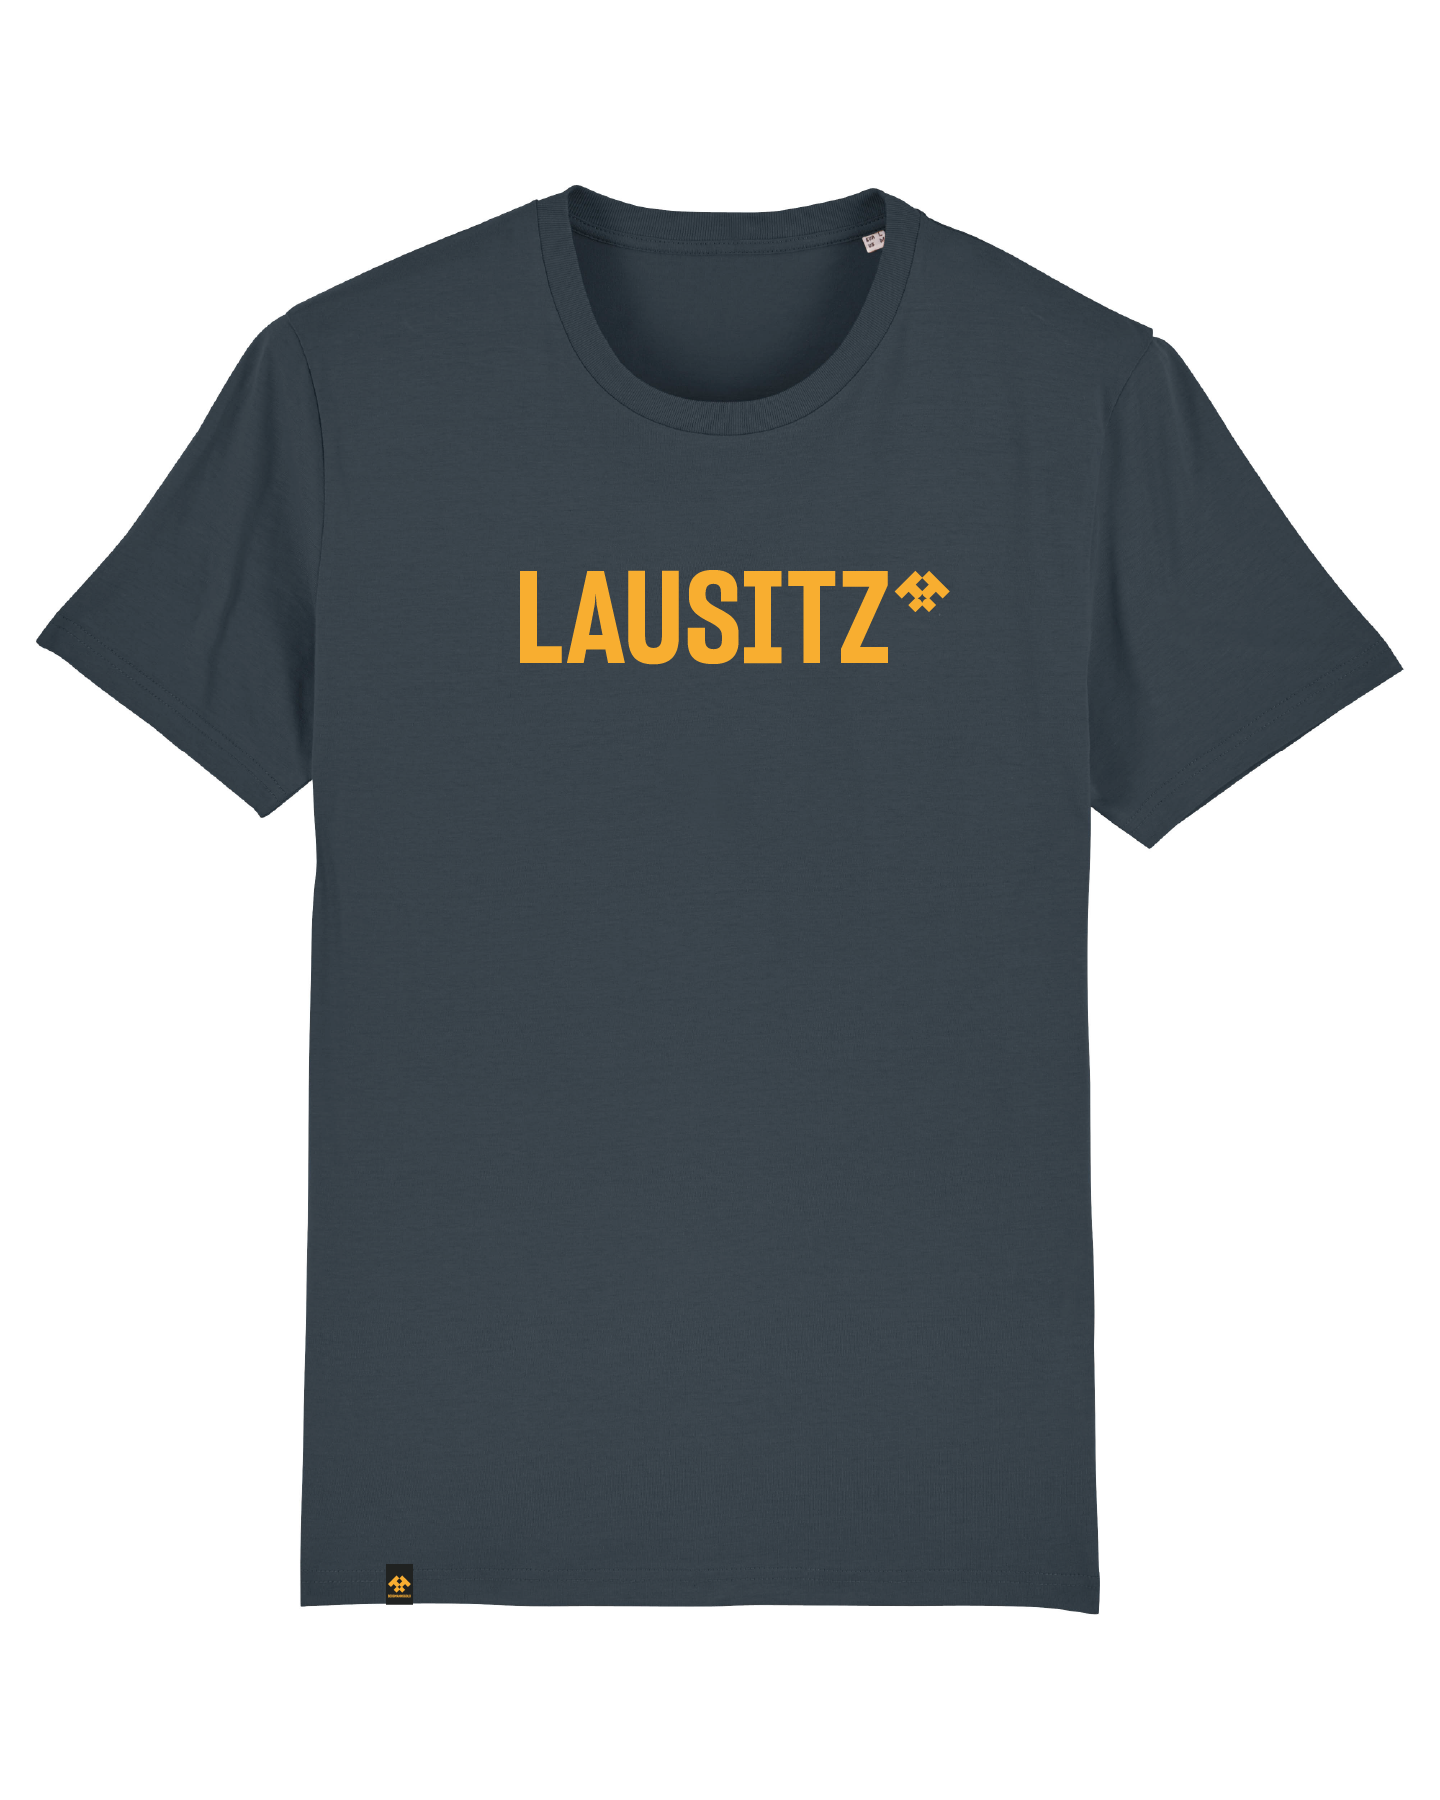 T-Shirt Herren LAUSITZ grau